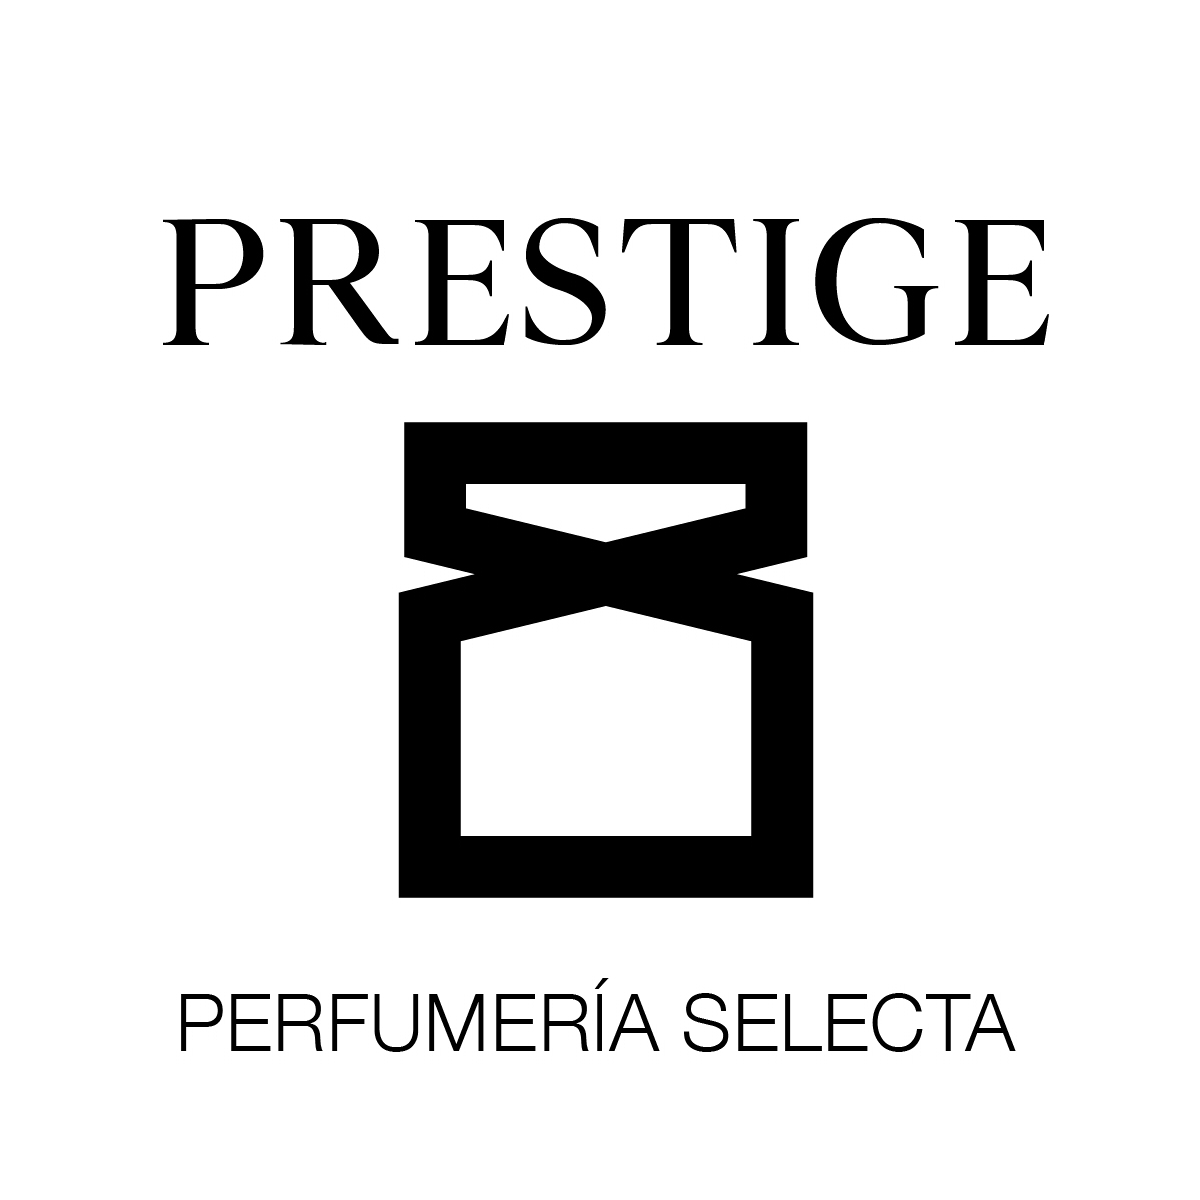 Prestige Home Logo Concept by Sehban Ali Akbar on Dribbble